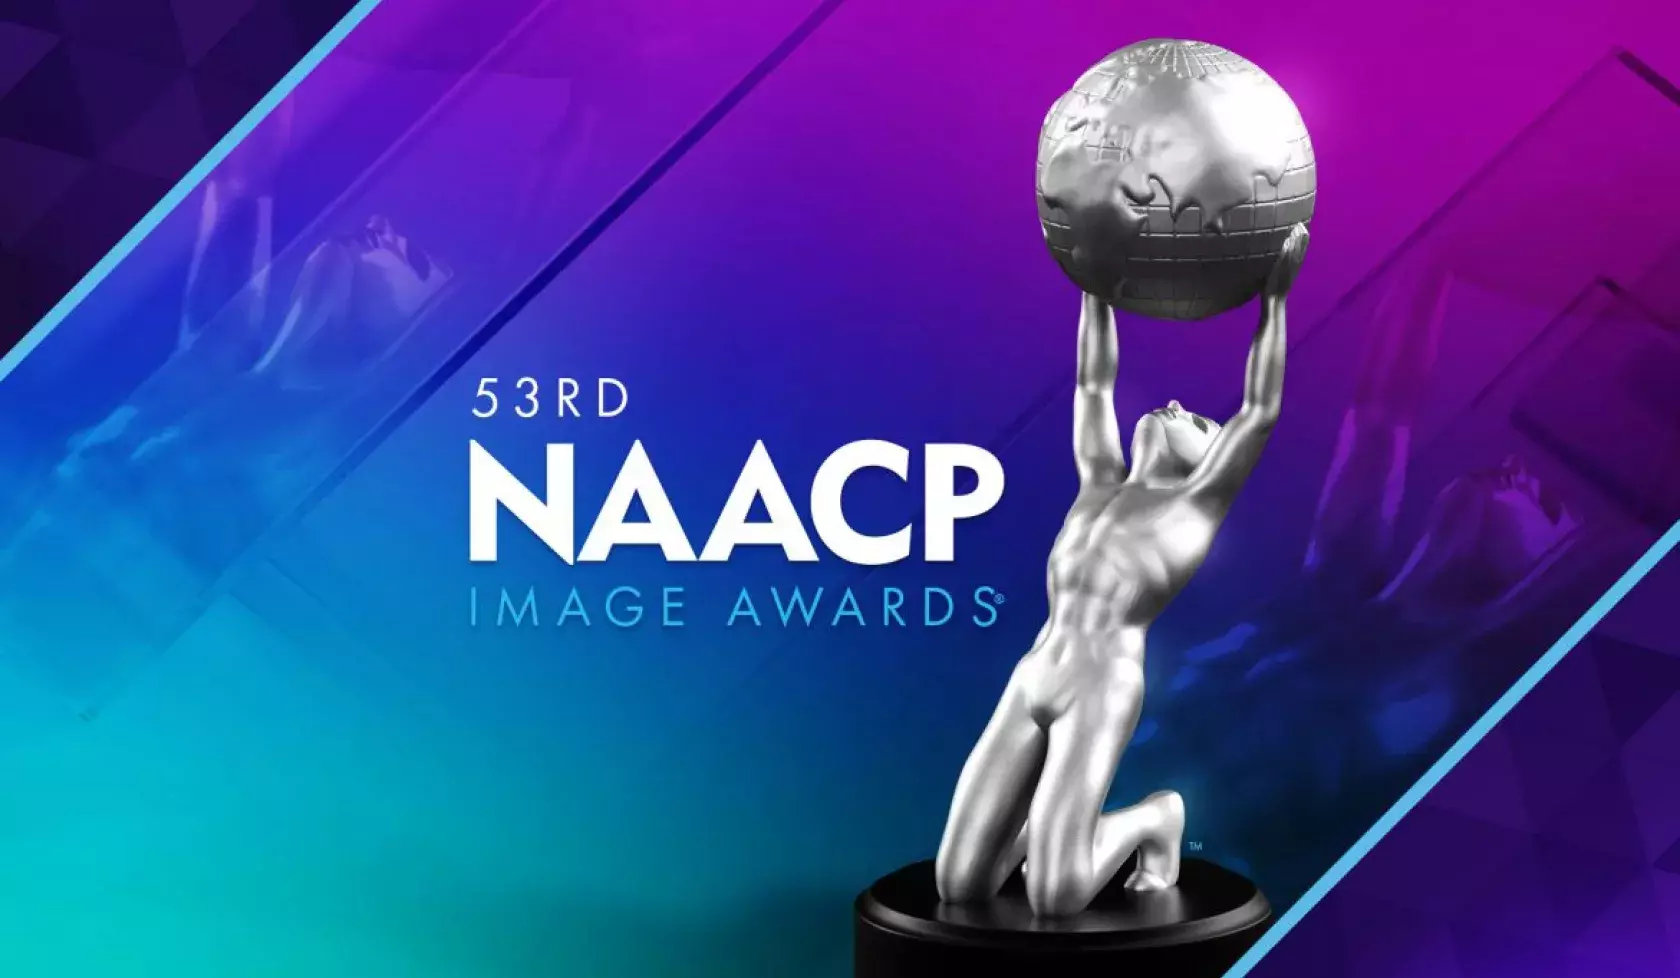 NAACP Image Awards (Image)